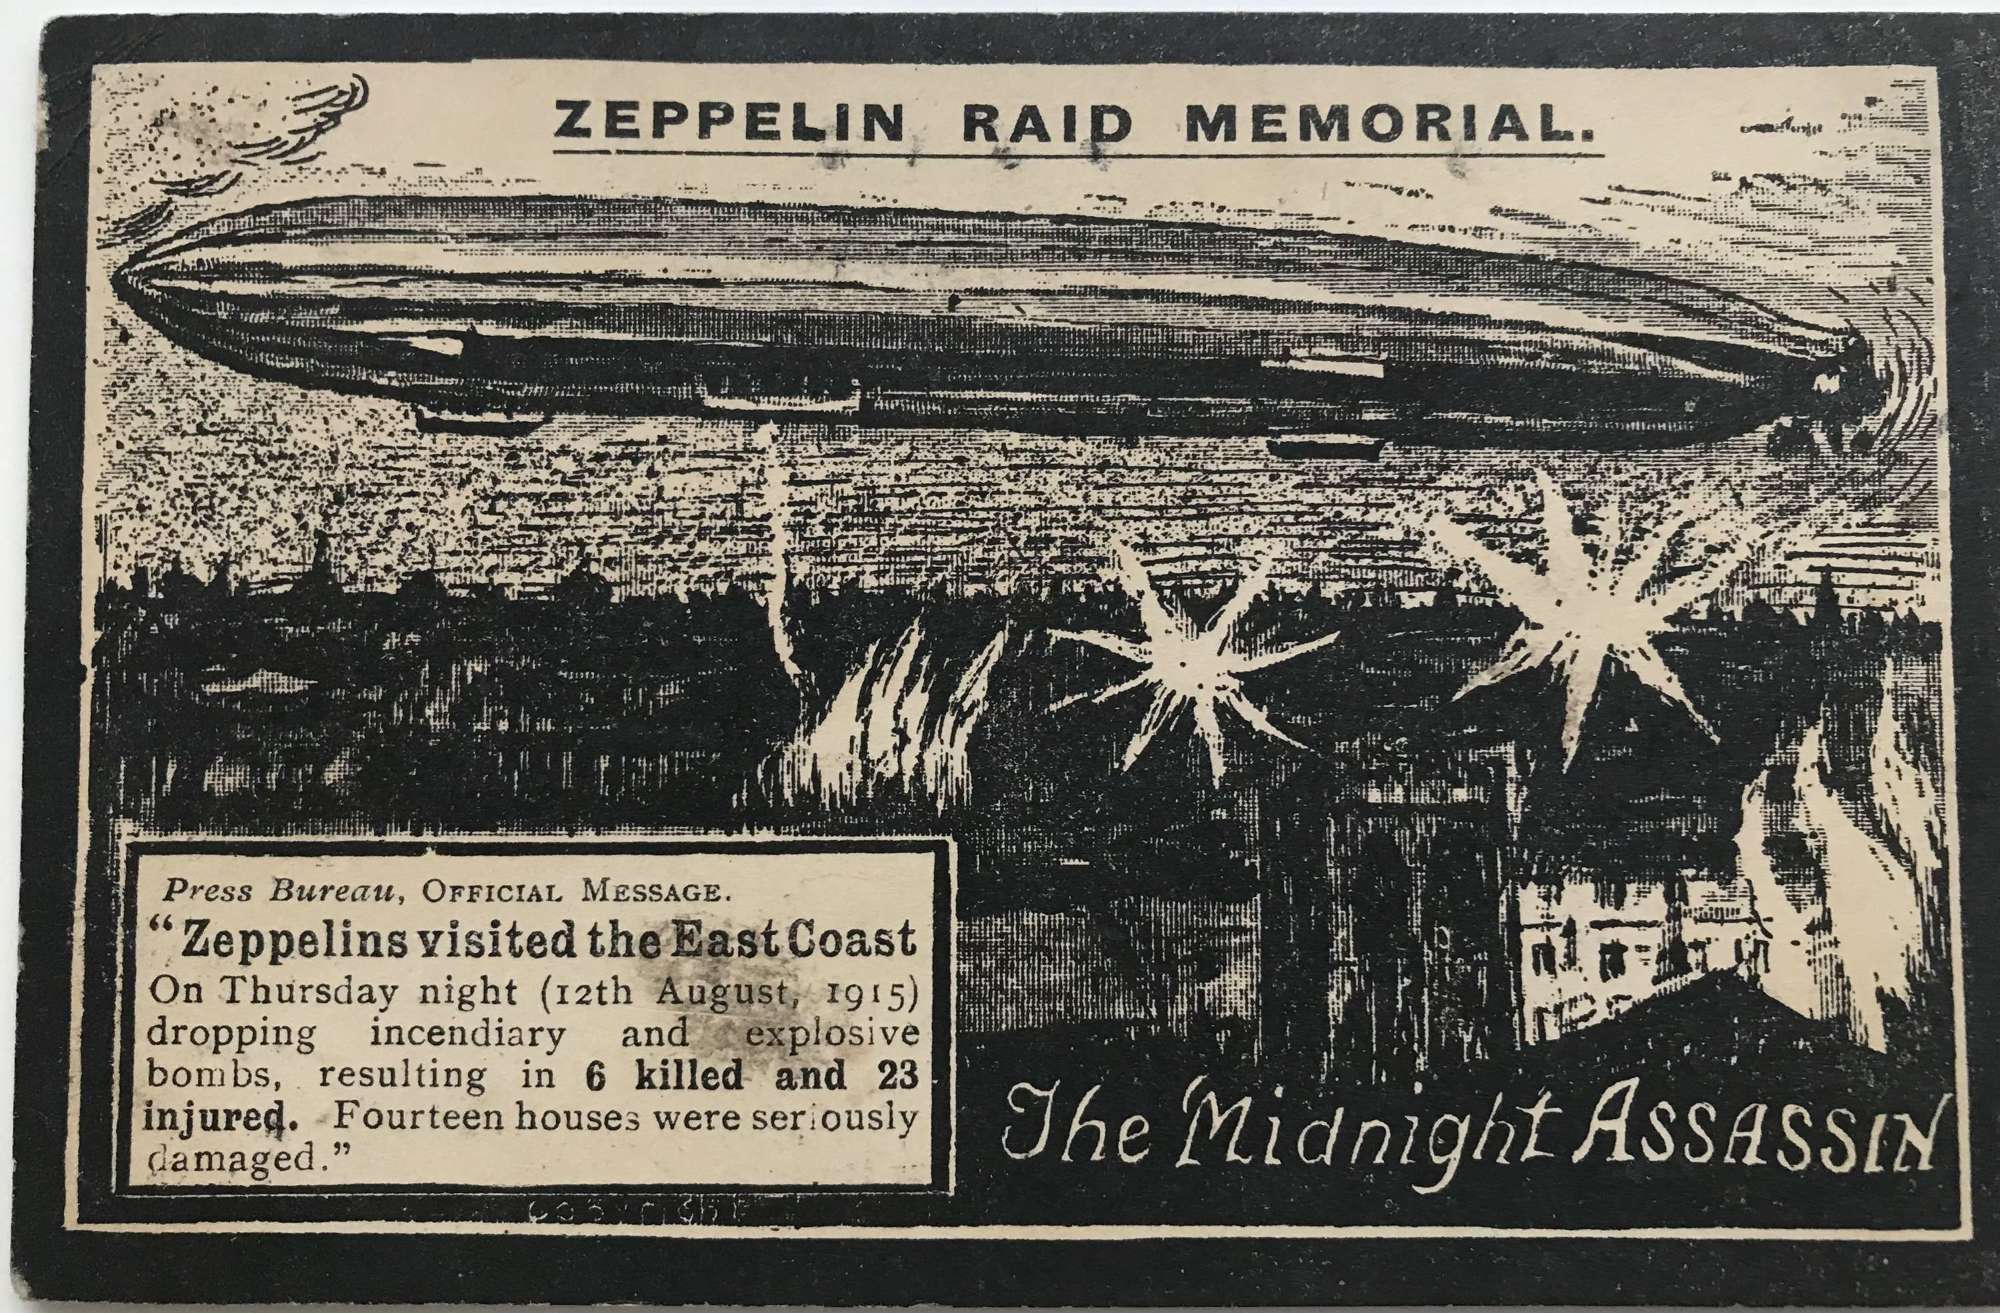 Zeppelin , raid  postcard, 1915 (the midnight assassin)